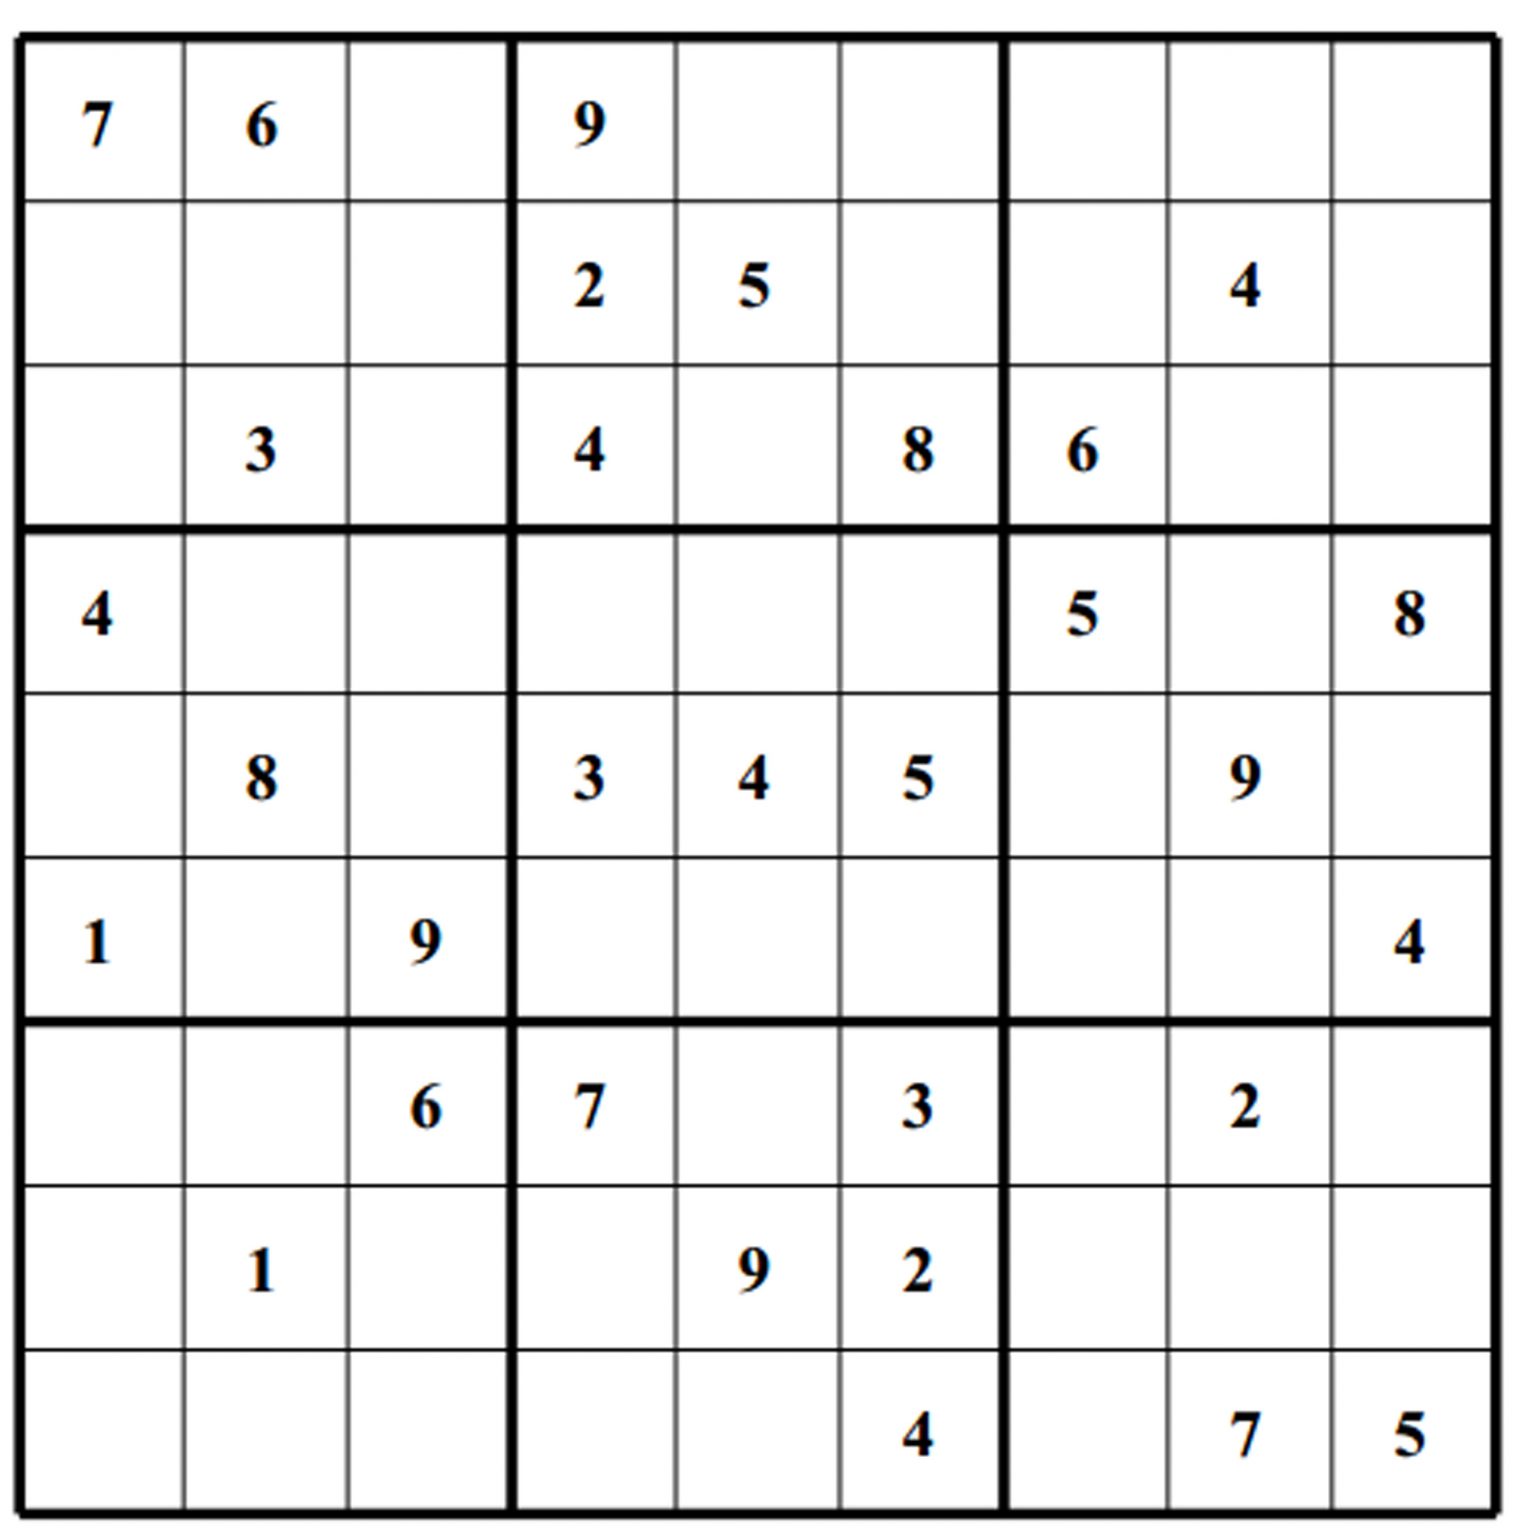 free-sudoku-puzzles-enjoy-daily-free-sudoku-puzzles-from-sudoku